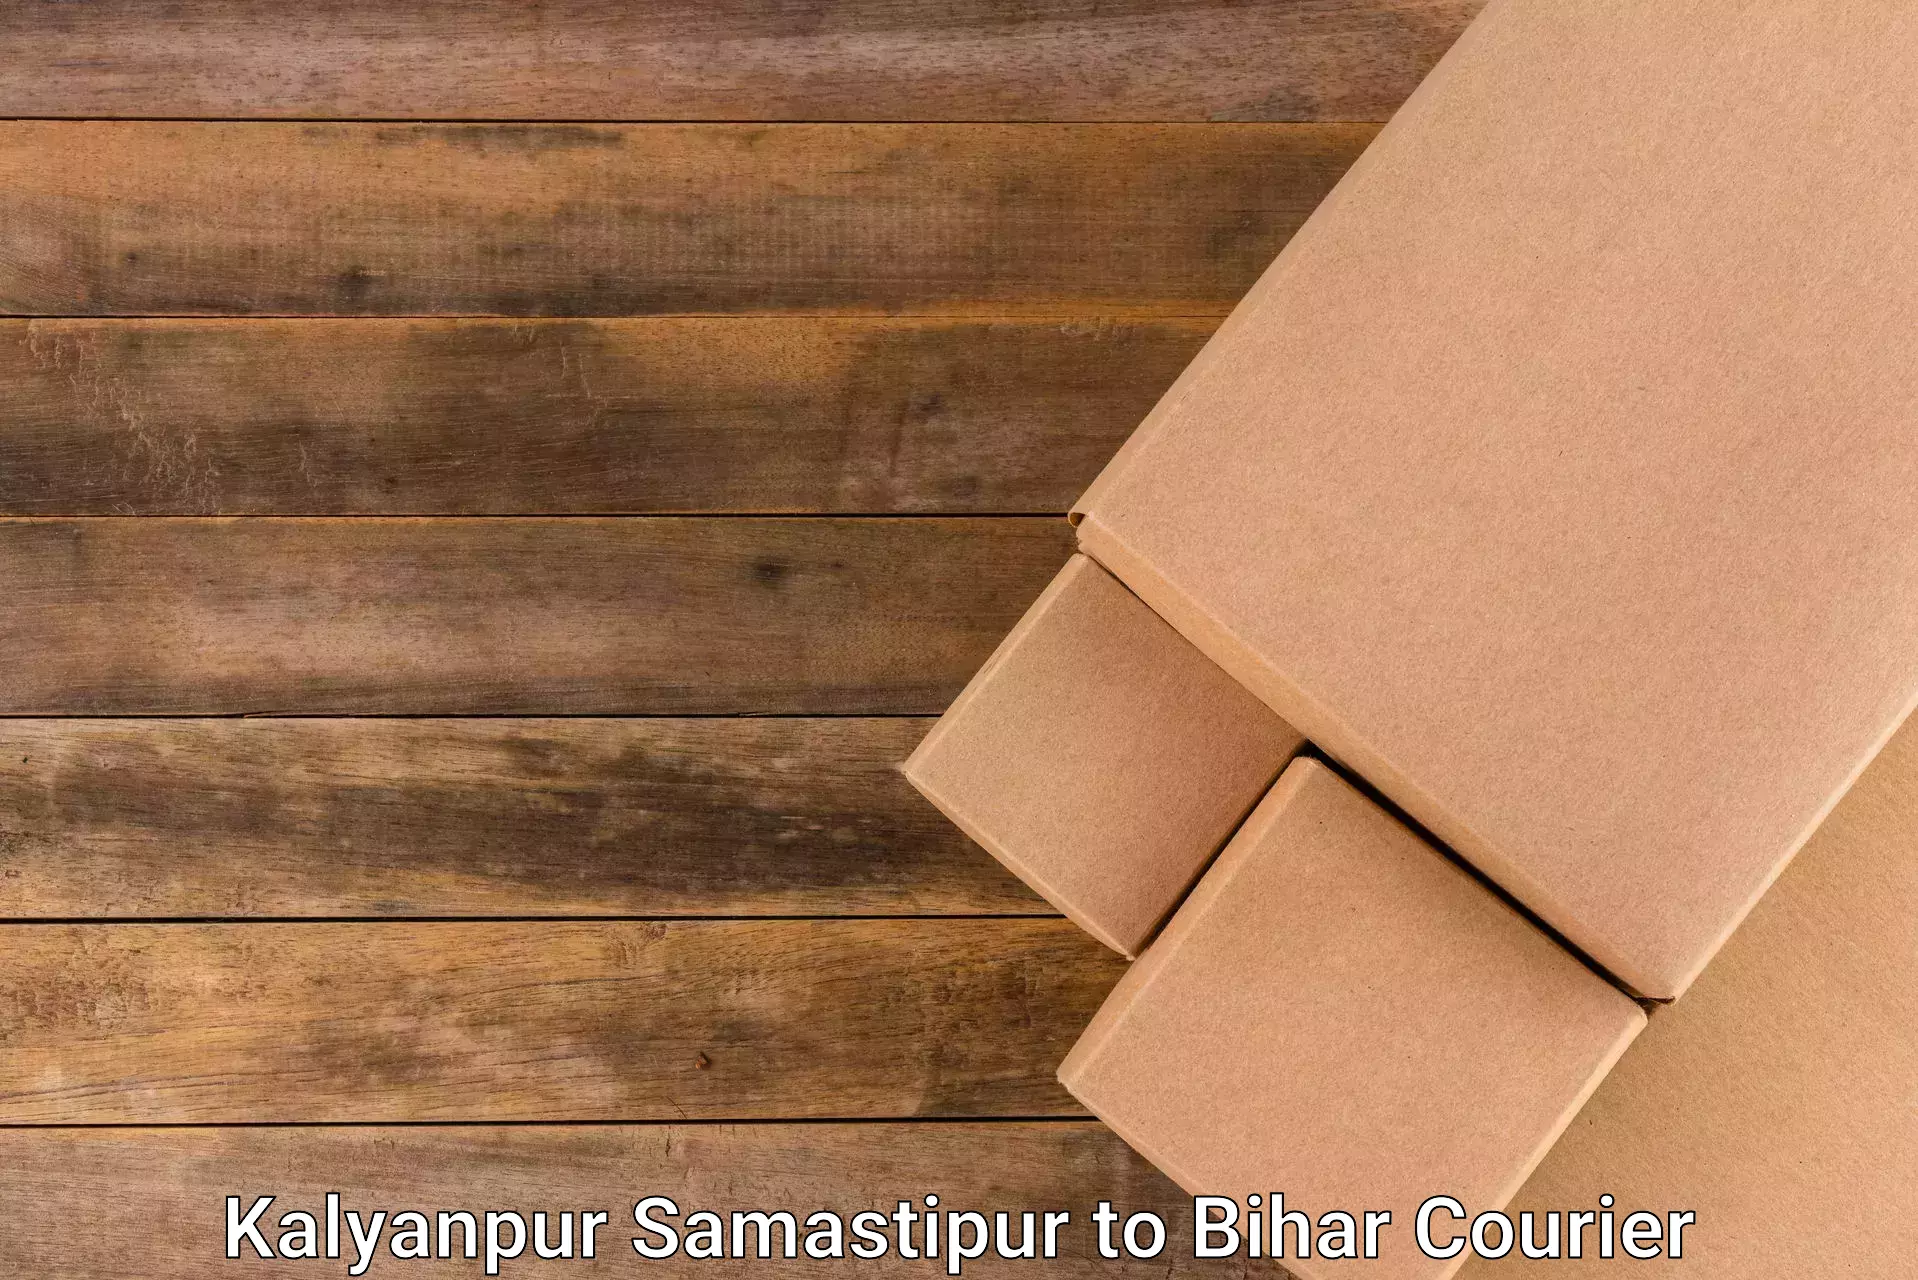 Weekend courier service Kalyanpur Samastipur to Madhepura